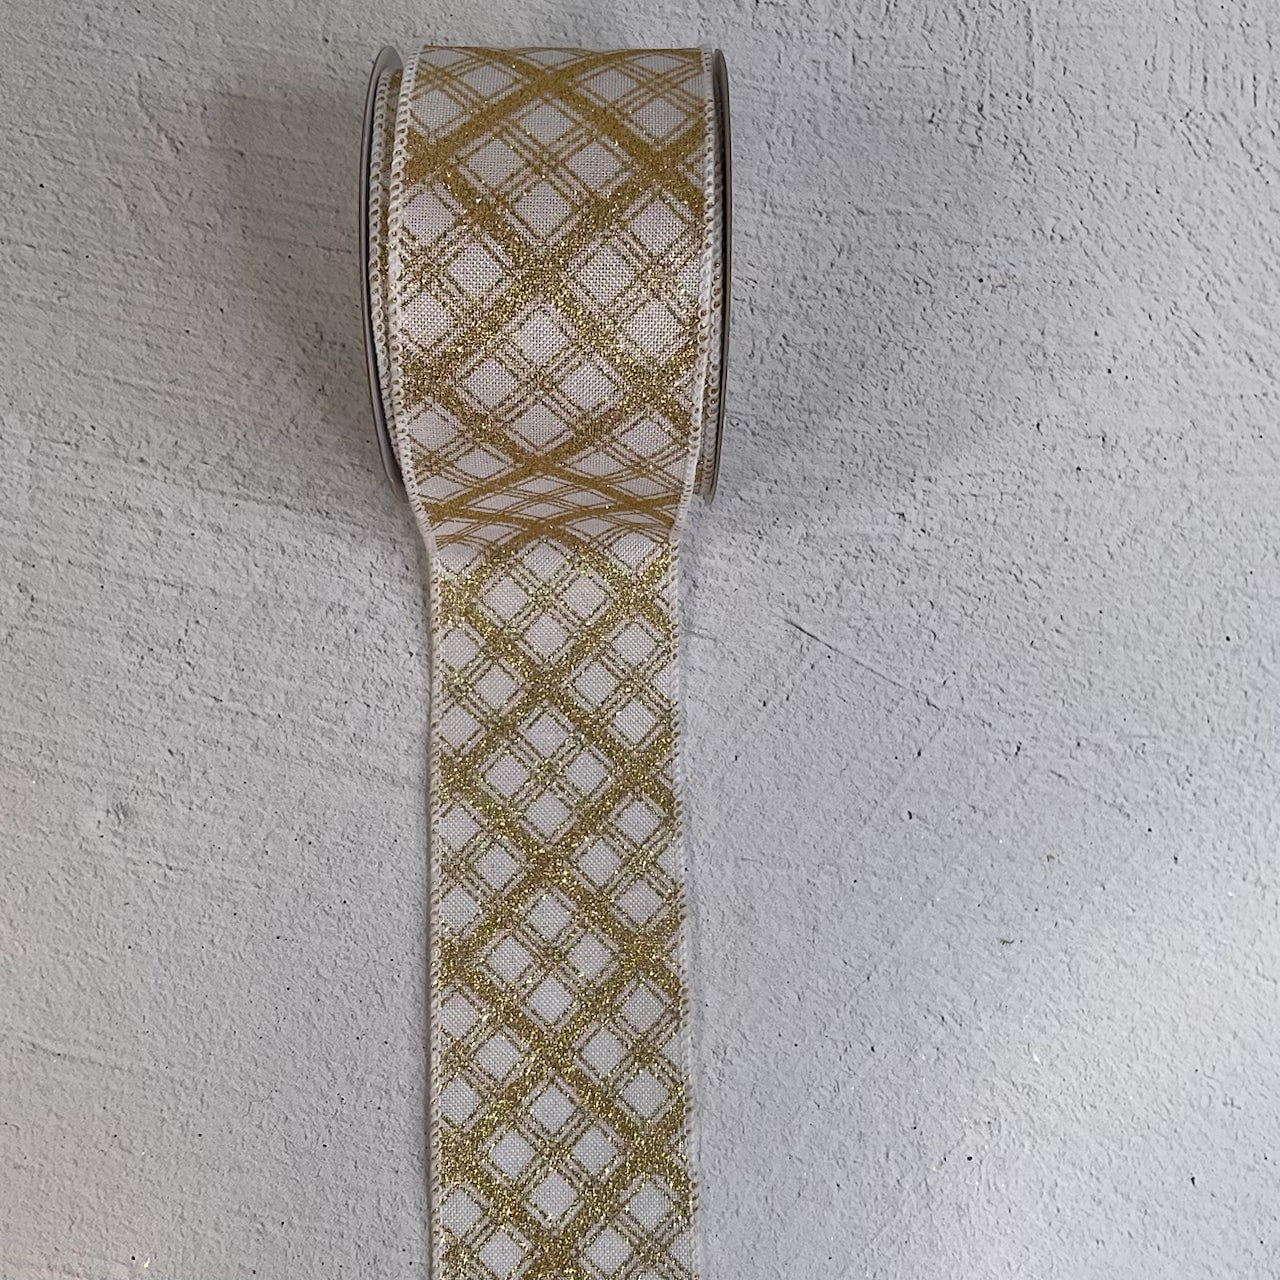 Baseball Ribbon, Wired Glitter Ribbon, 2.5 inches wide 10 yards